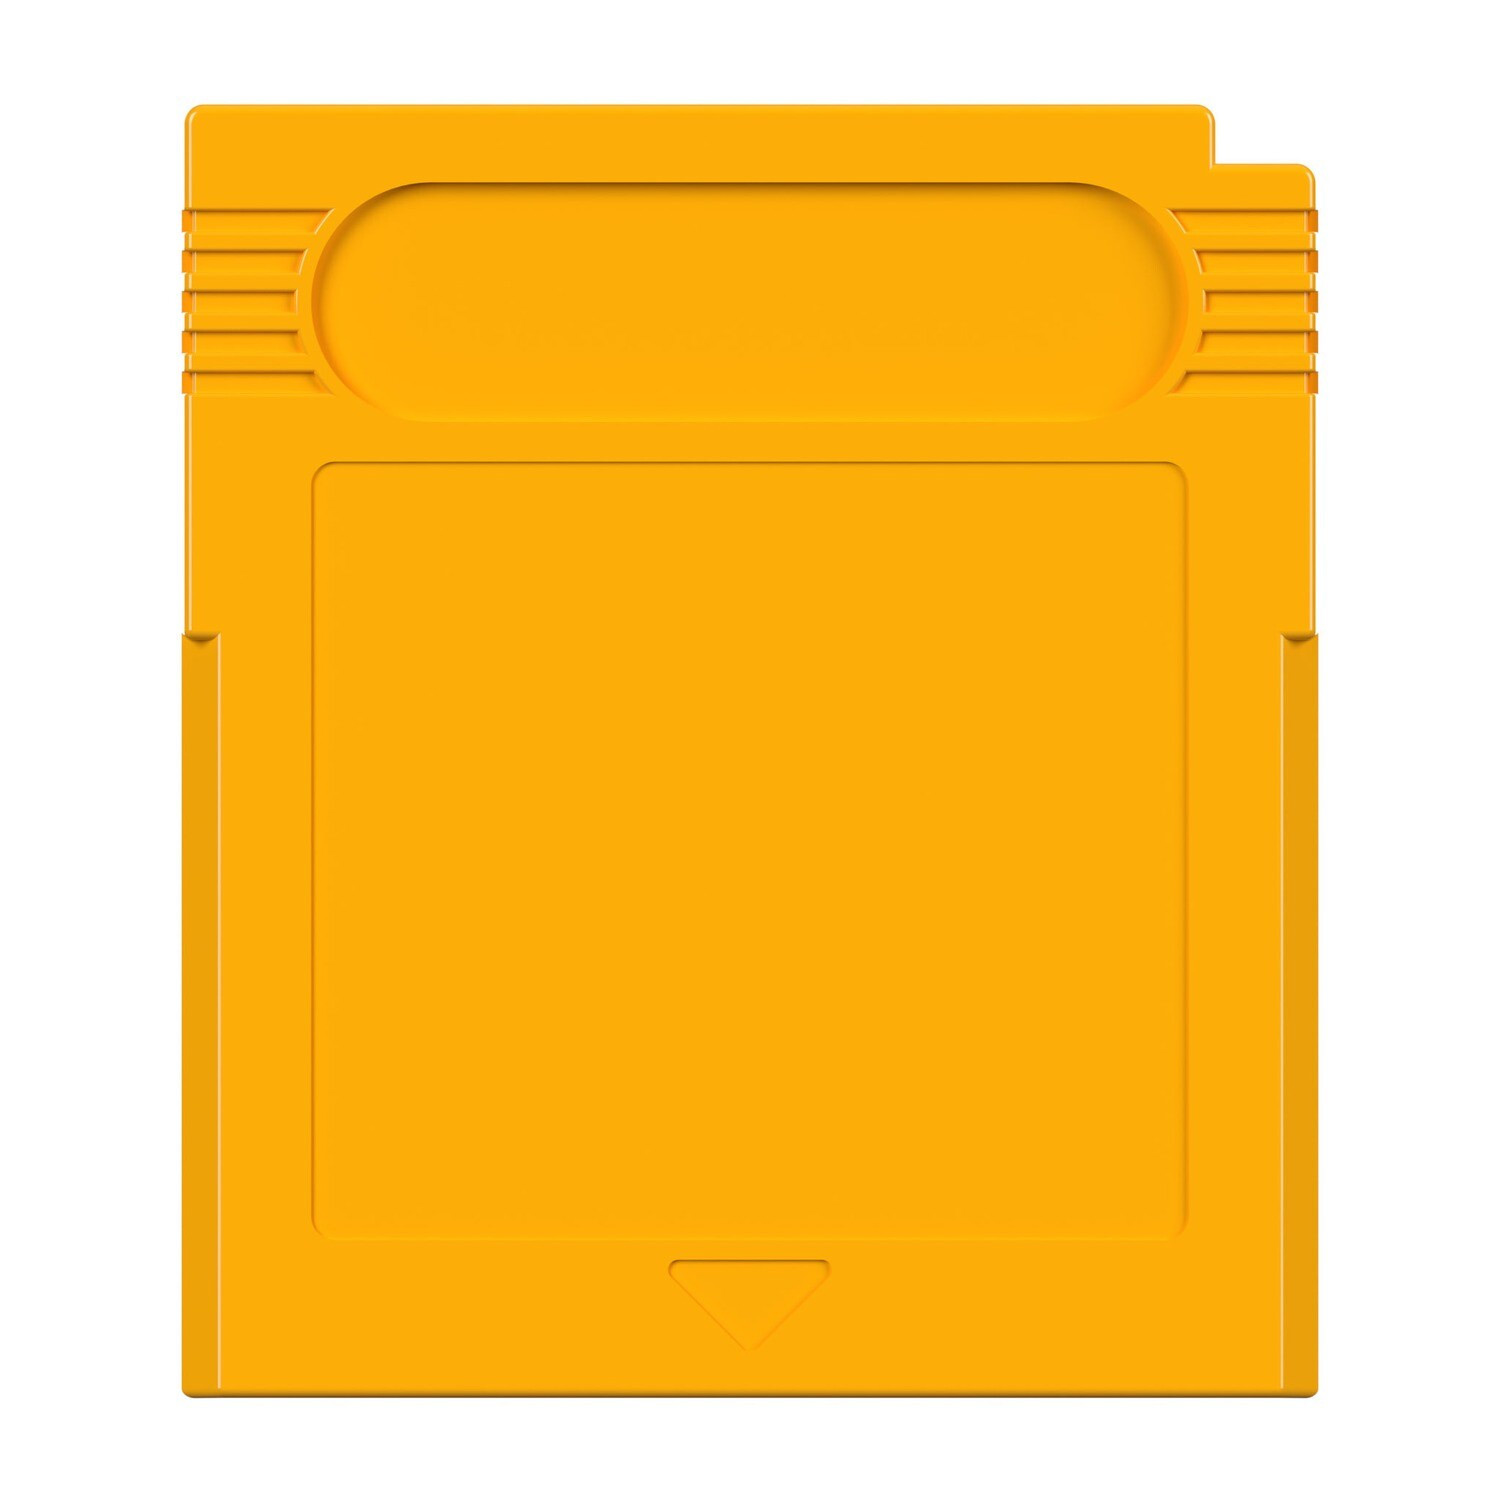 Game Boy Module Shell (Yellow)